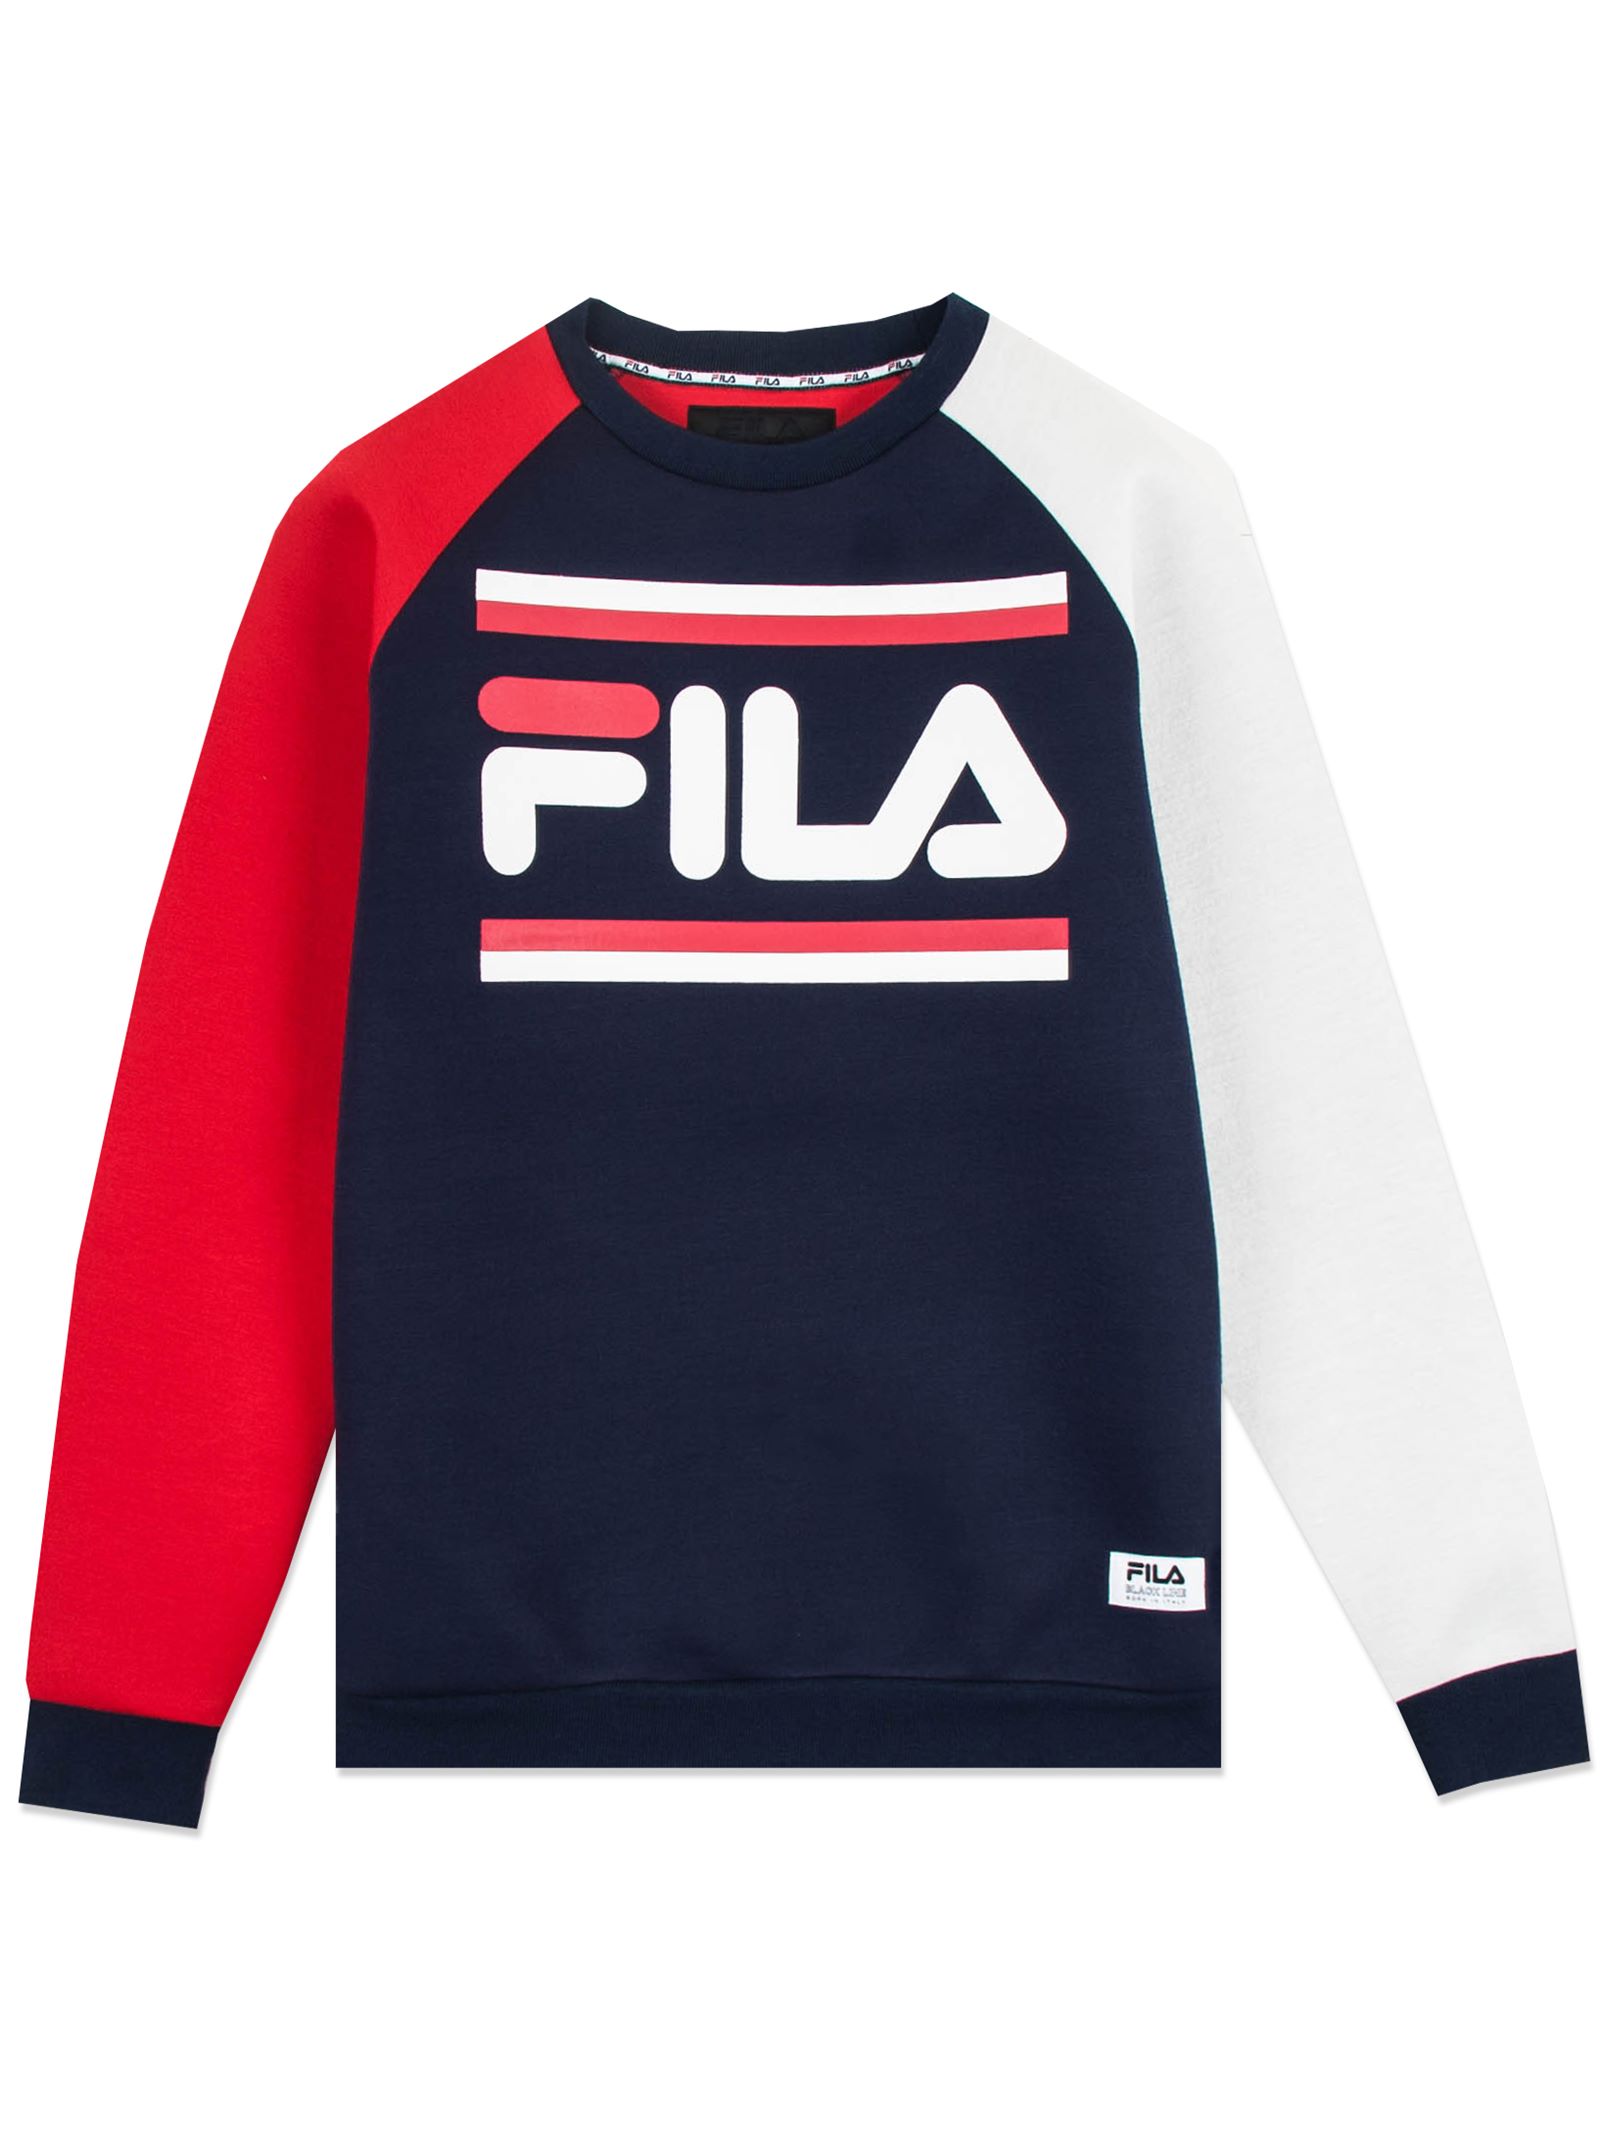 FILA Zola Graphic Sweatshirt | Dapper Street